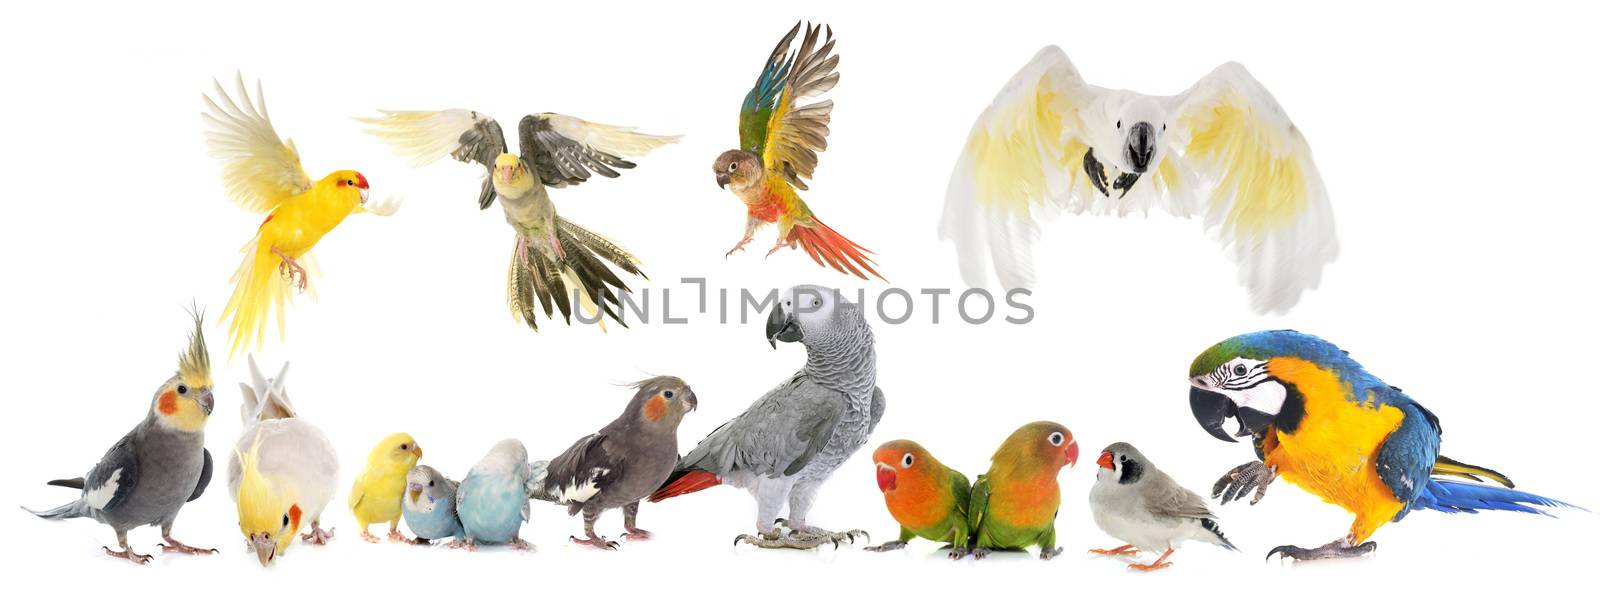 group of birds by cynoclub